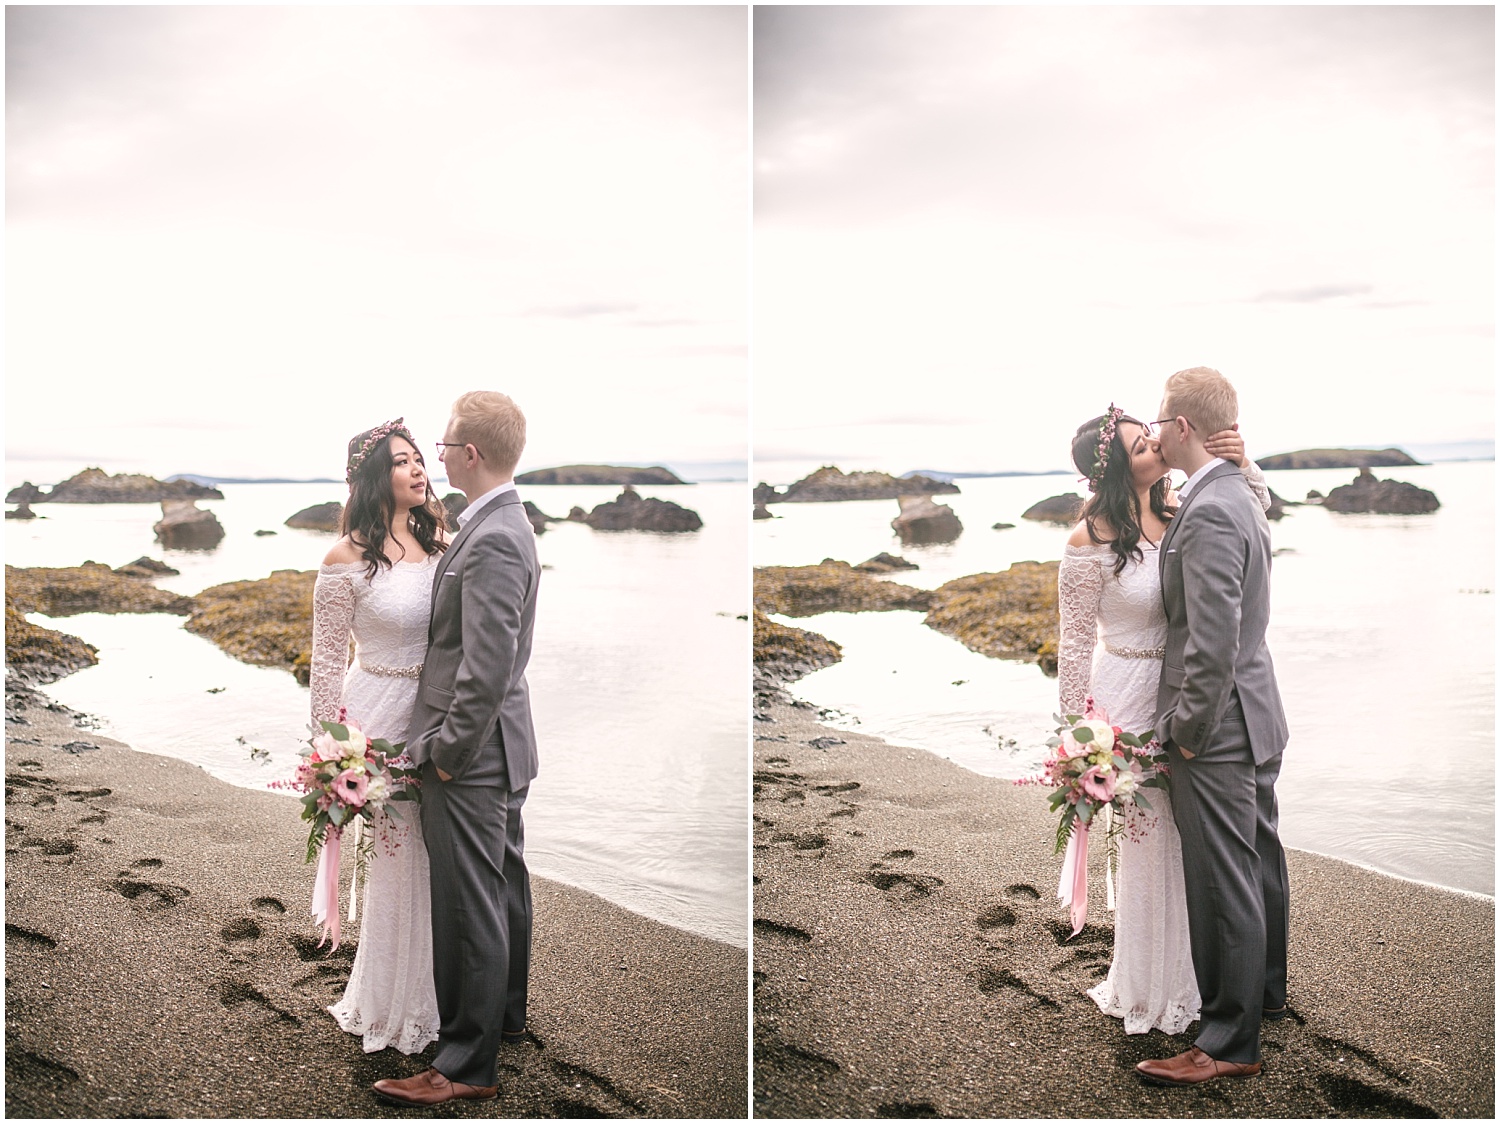 Deception Pass elopement photos at Rosario Beach in Anacortes, Washington